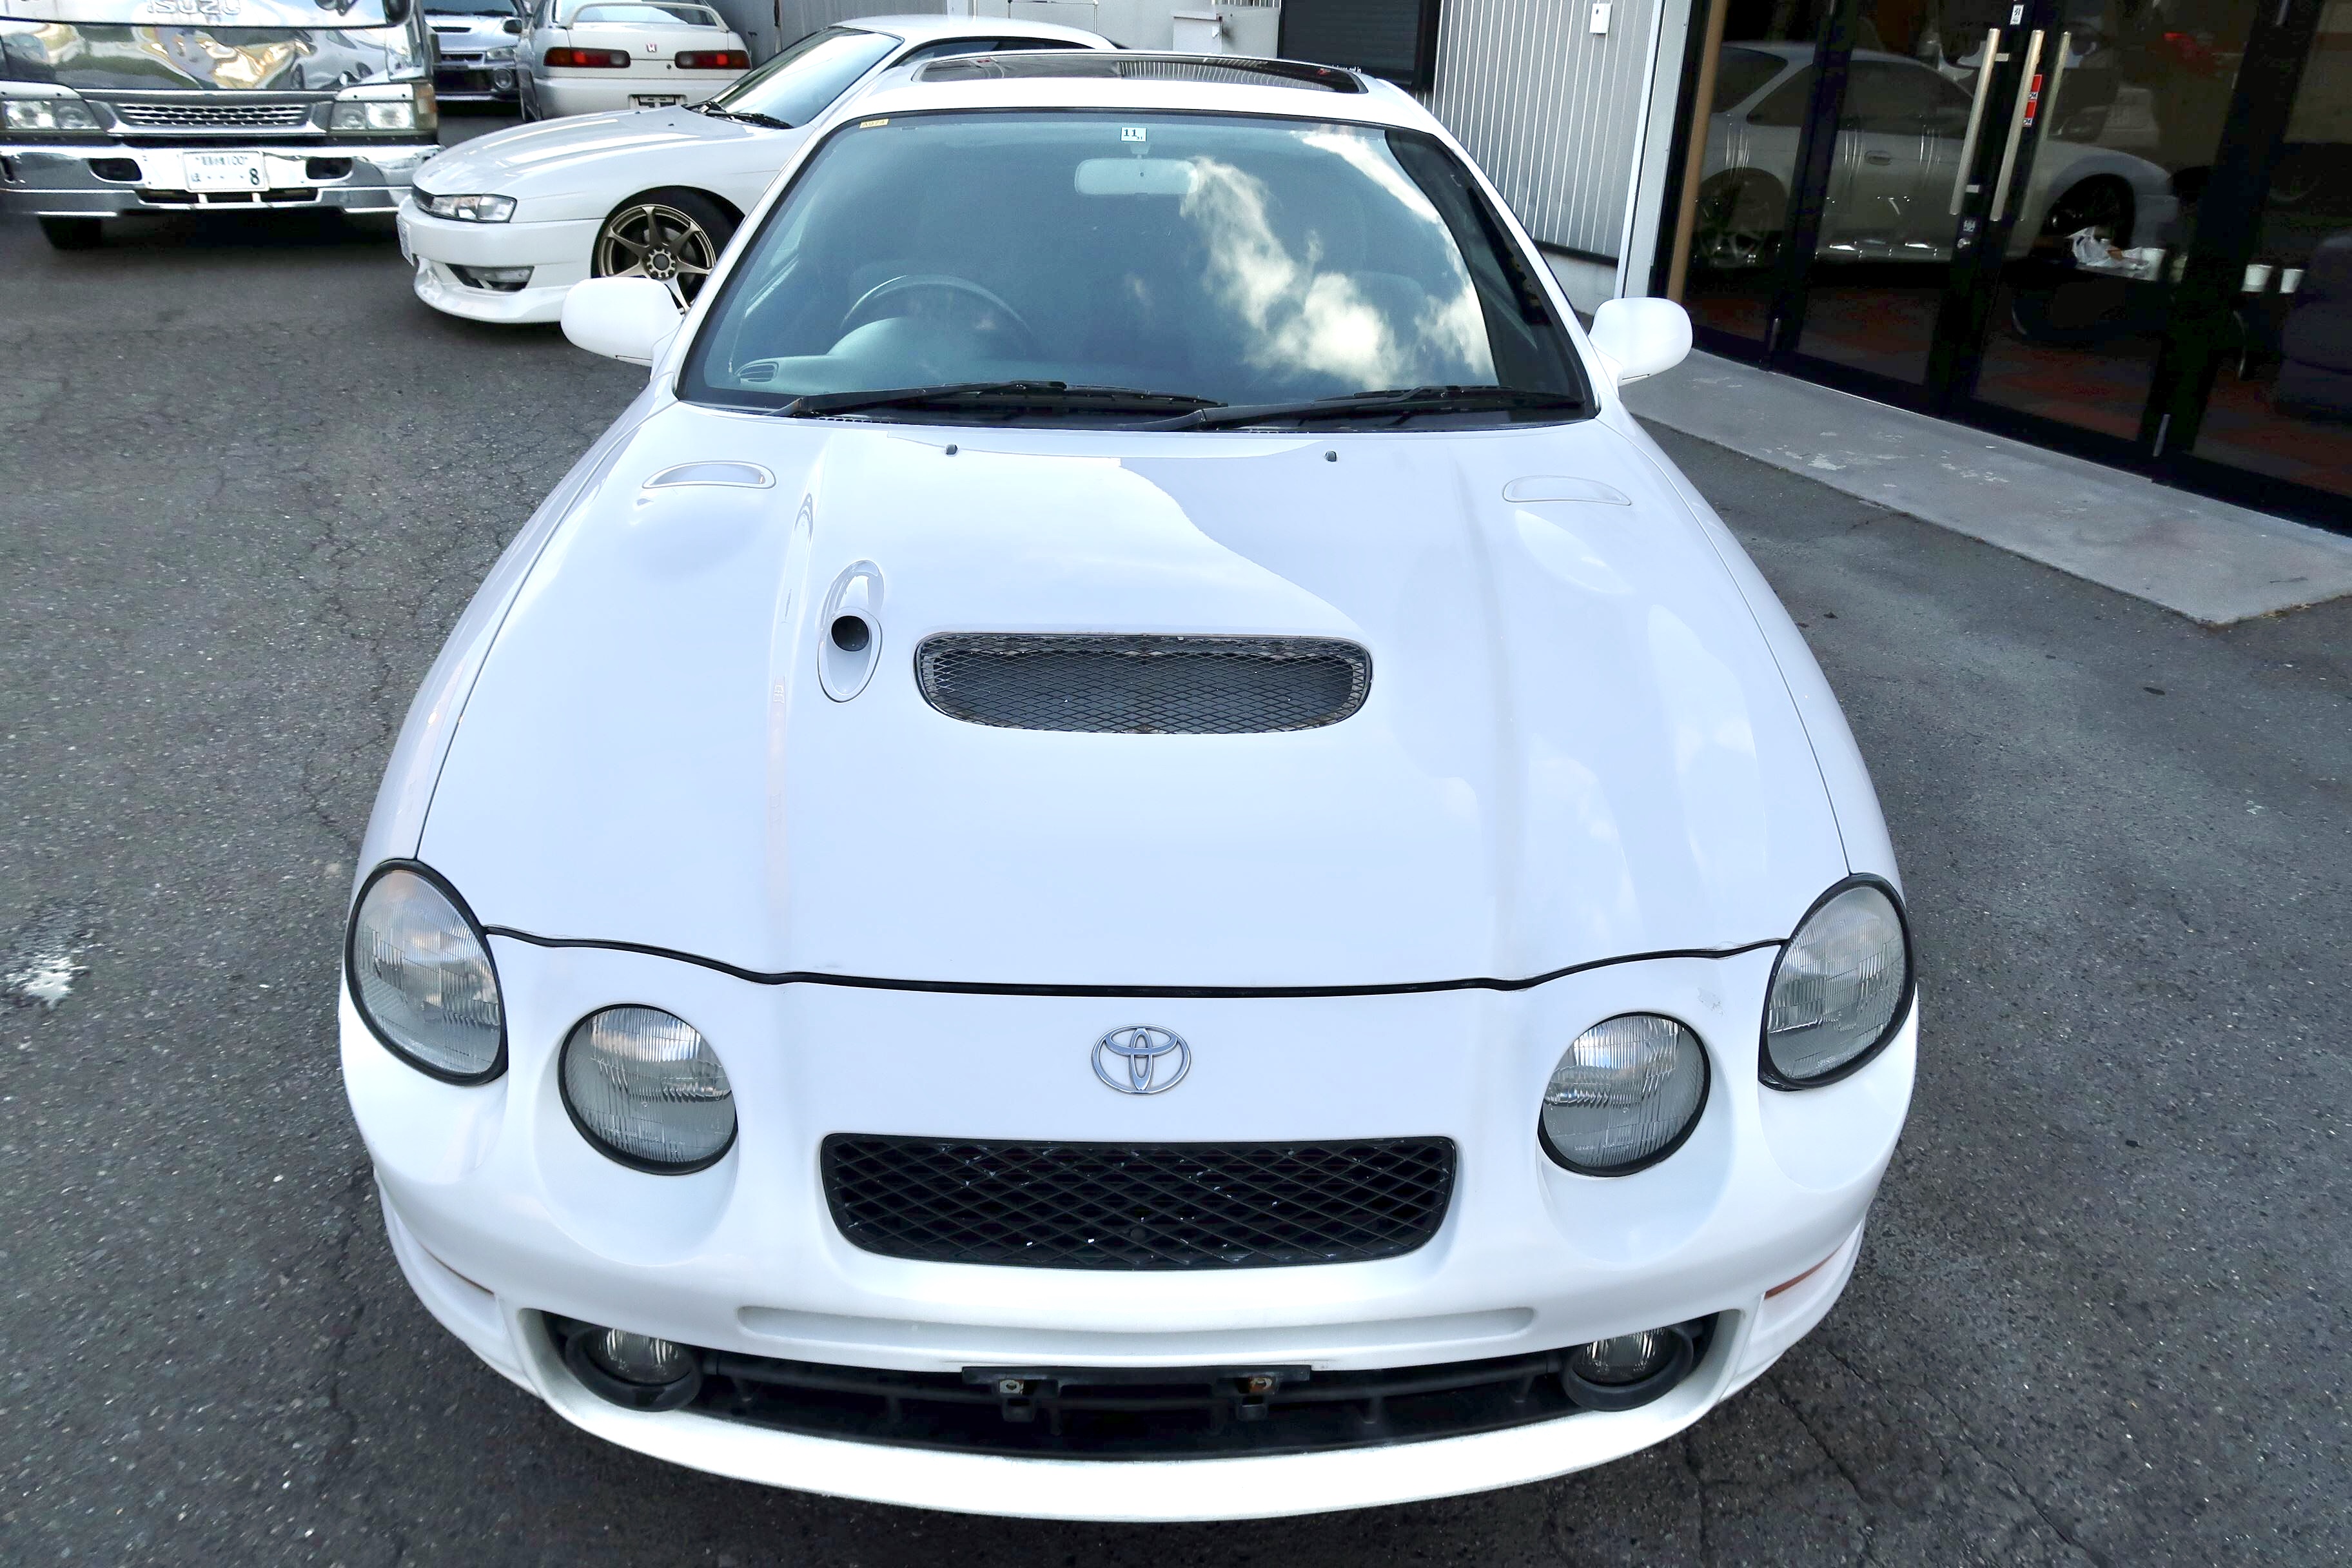 Toyota Celica GT-Four for sale (#3544) - Garage Defend